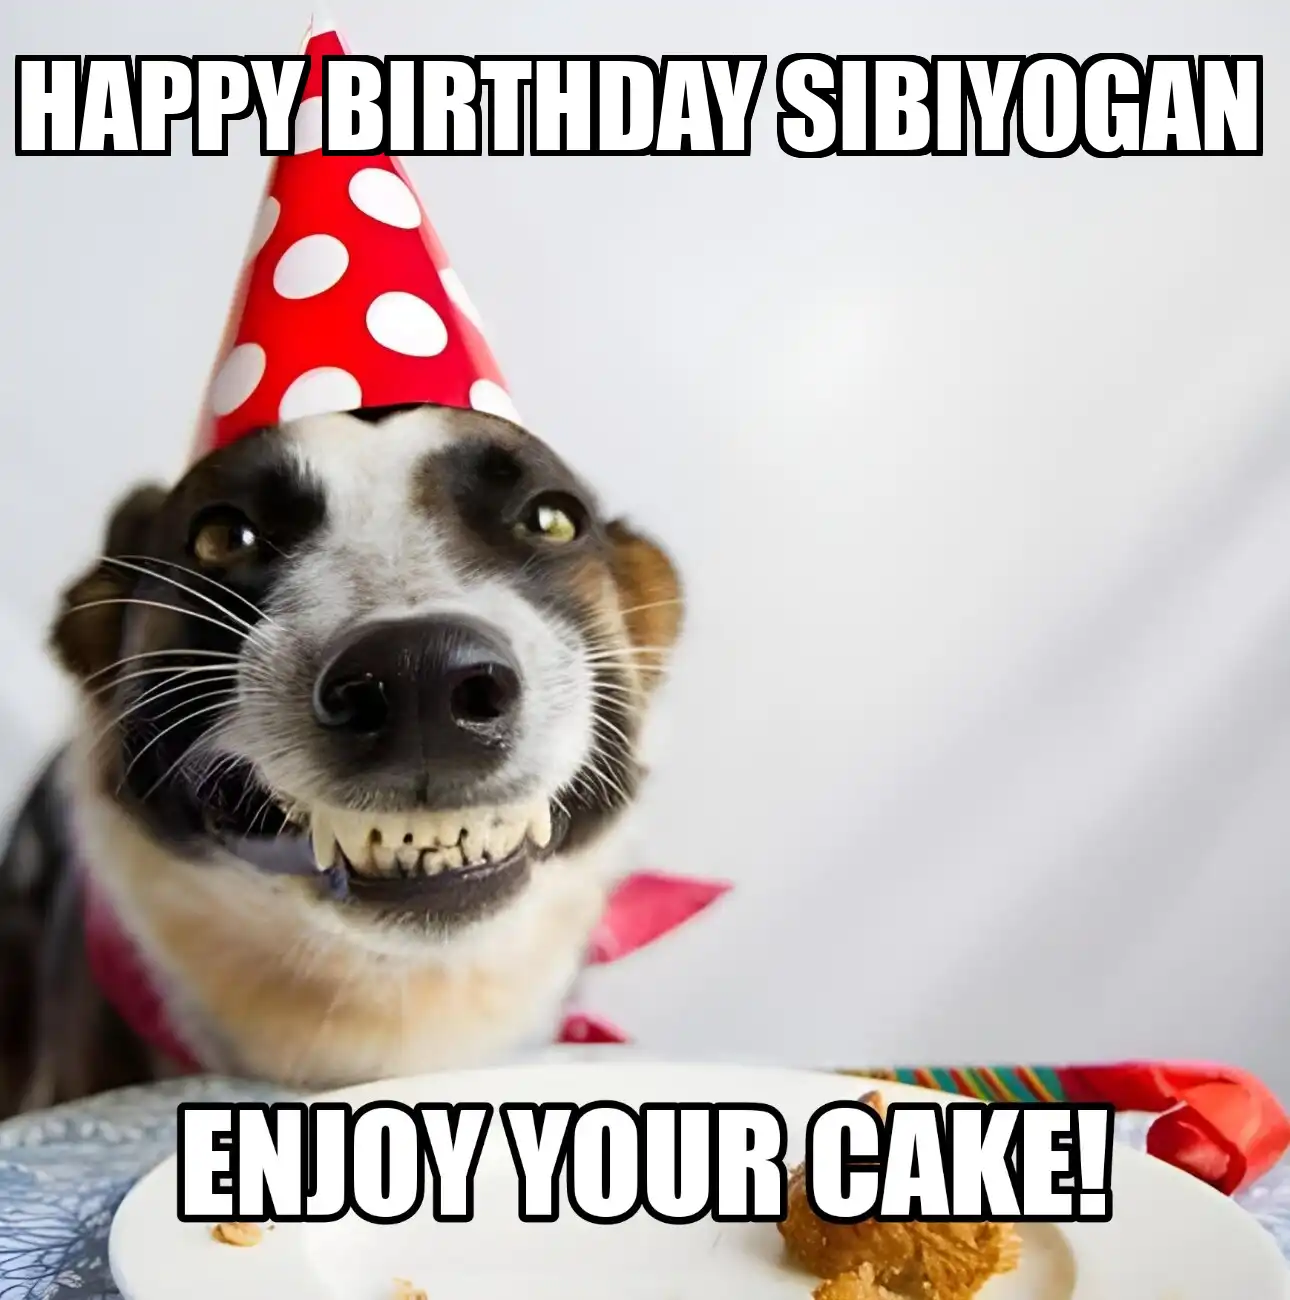 Happy Birthday Sibiyogan Enjoy Your Cake Dog Meme